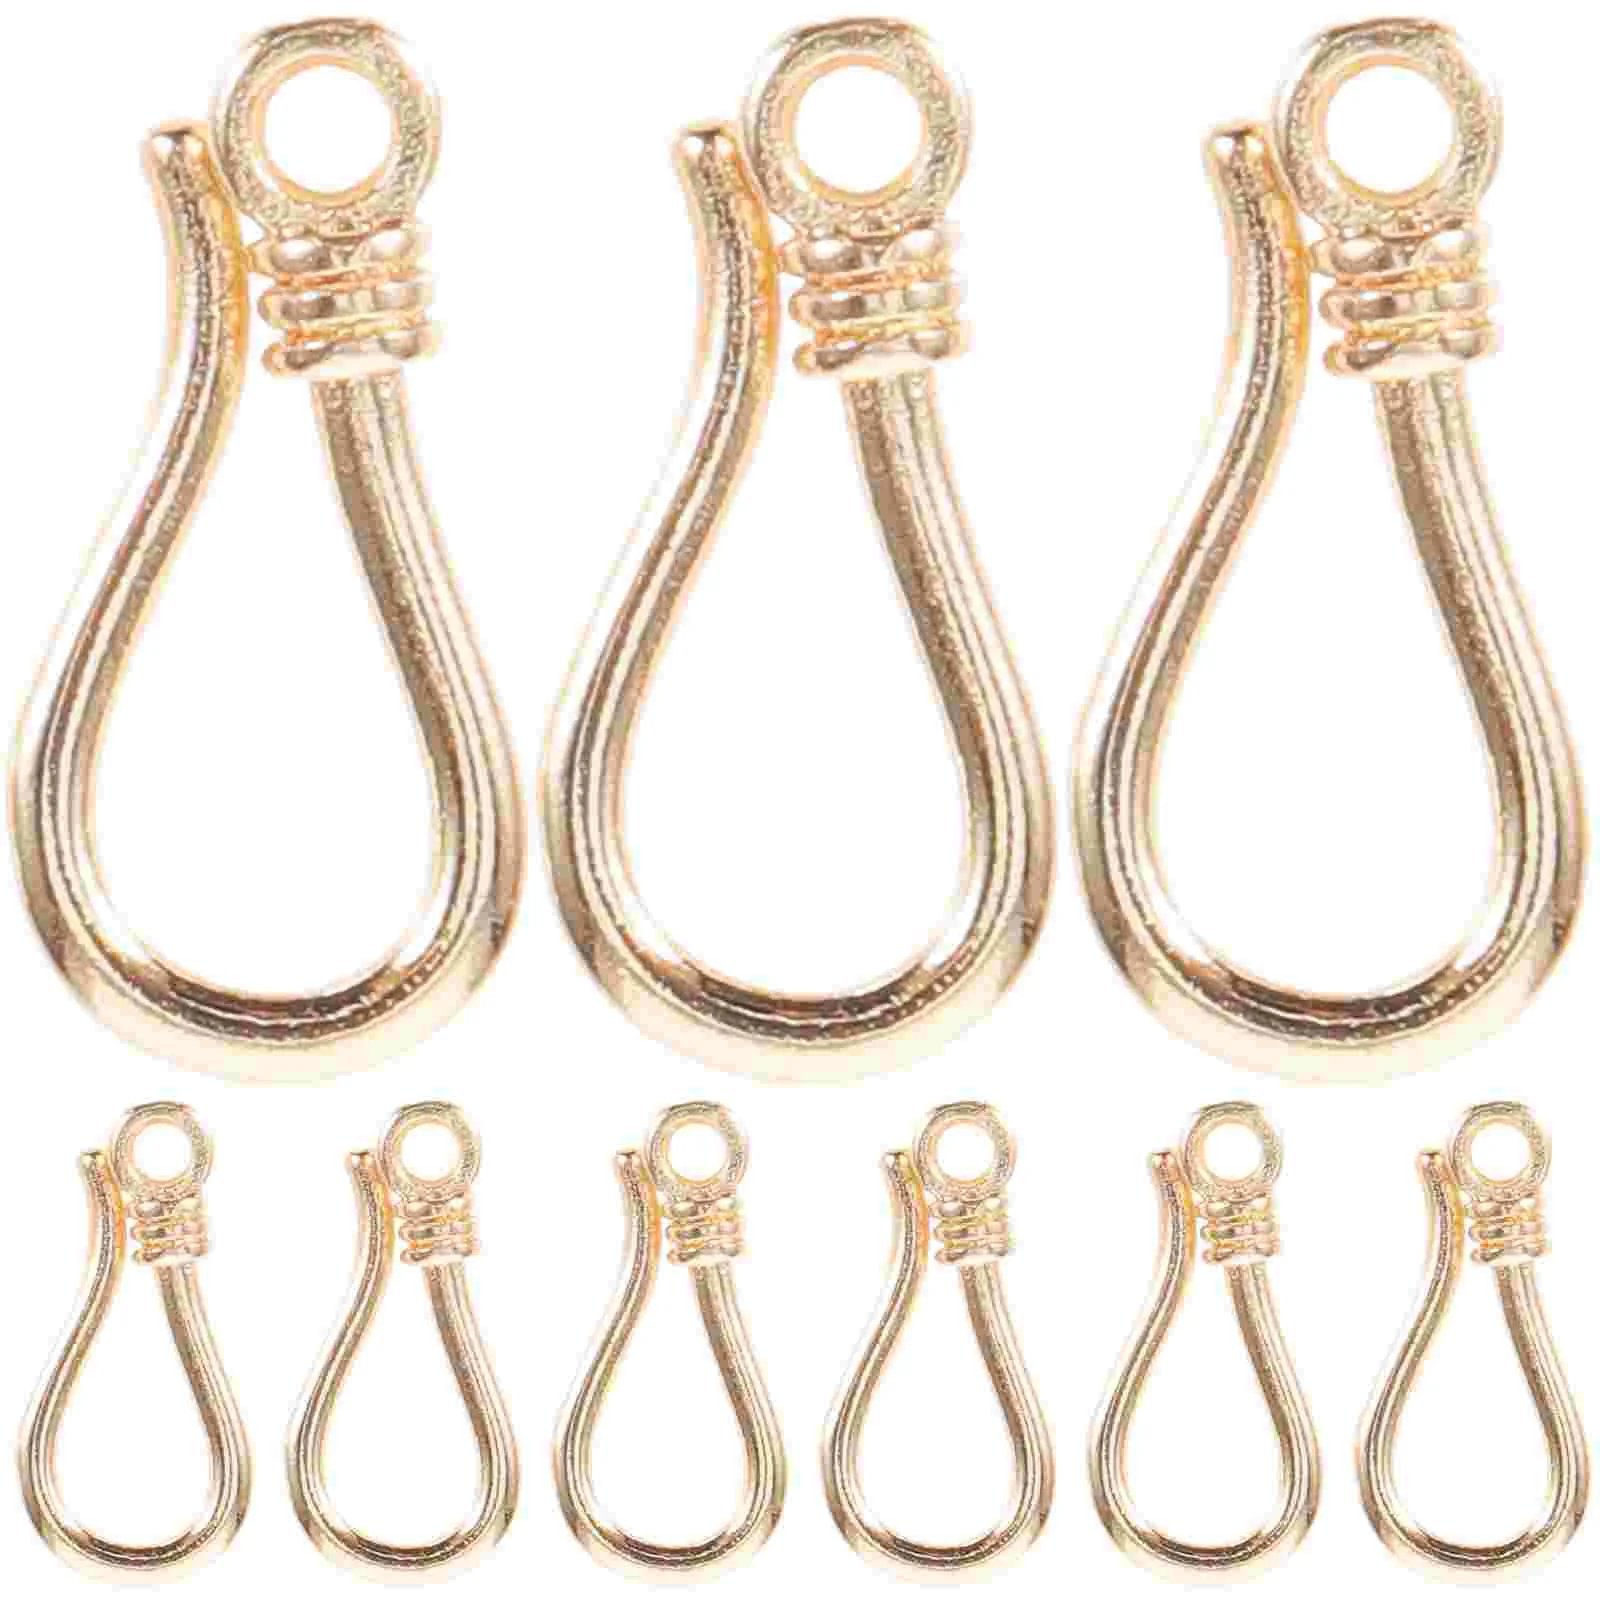 

Clasp Necklace Jewelry Clasps Hook S Extender Bracelet Connector Diy Clip End Metal Connectors Closures Extenders Lobster